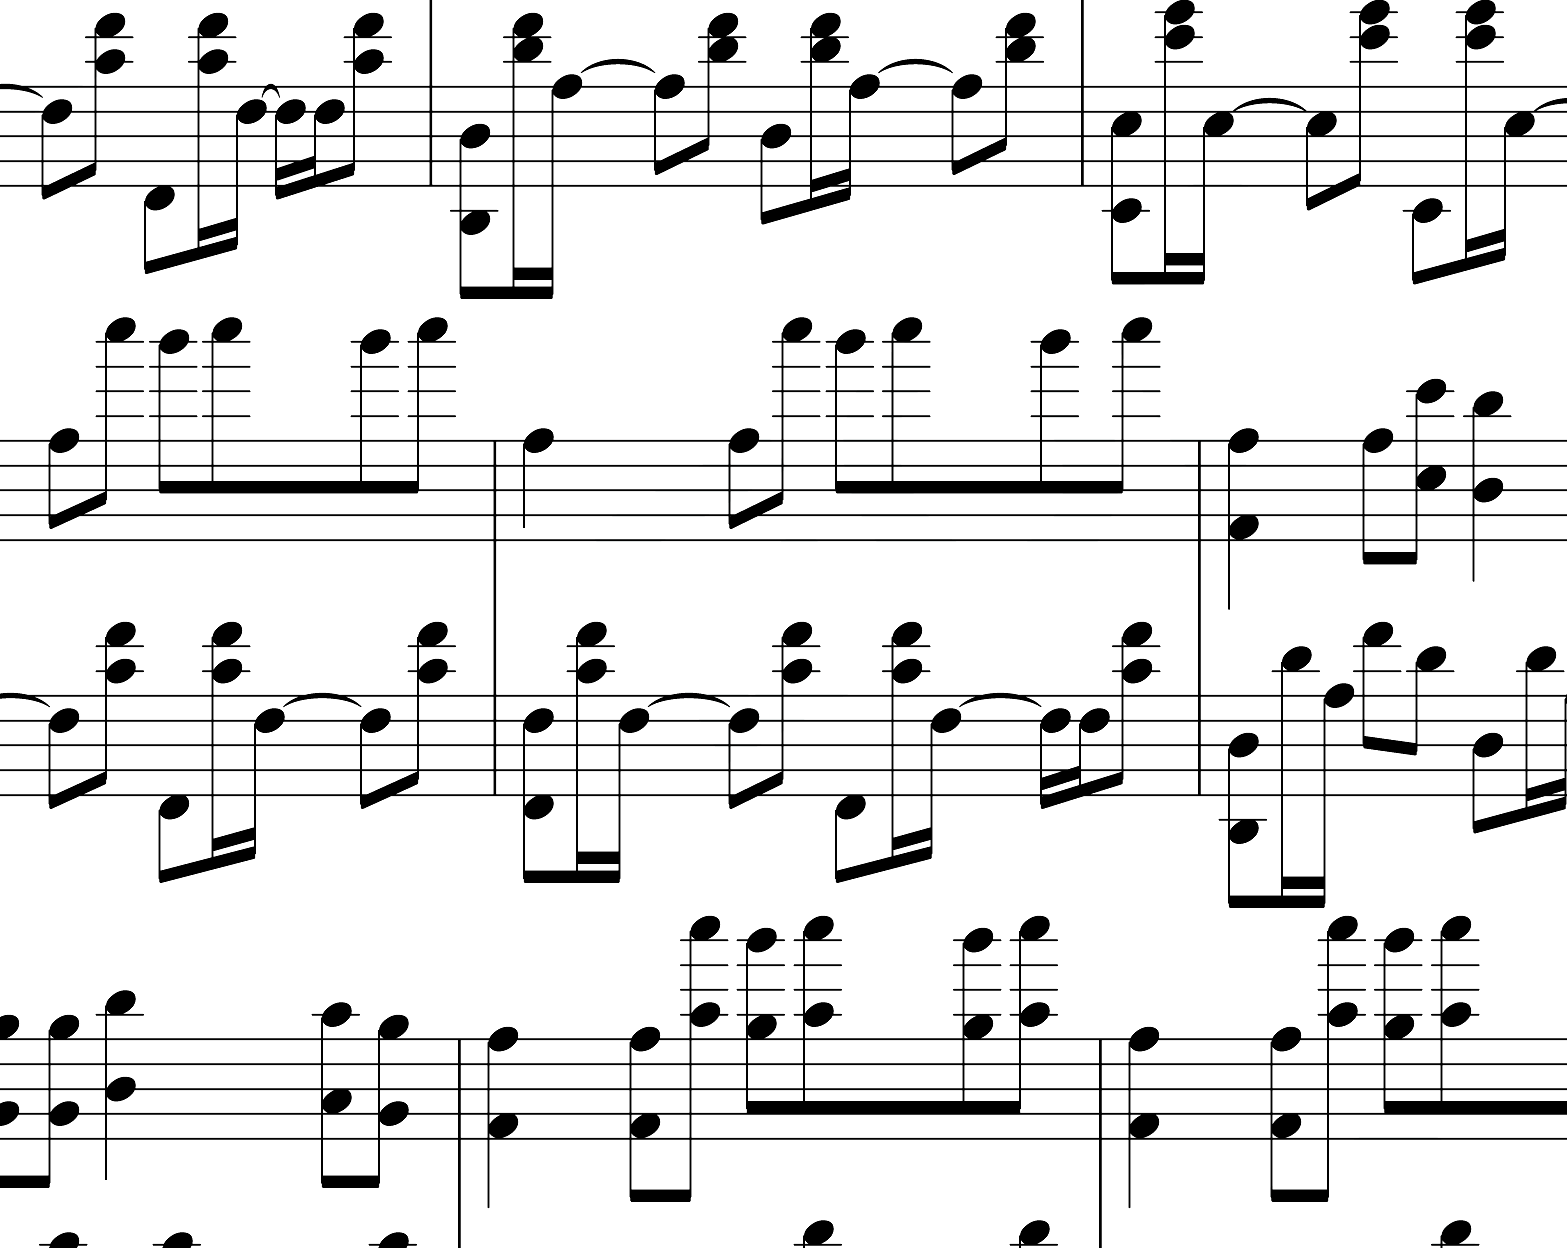 Astronomia钢琴谱-黑人抬棺-电音神曲-一入电音深似海，从此抖腿难以改！